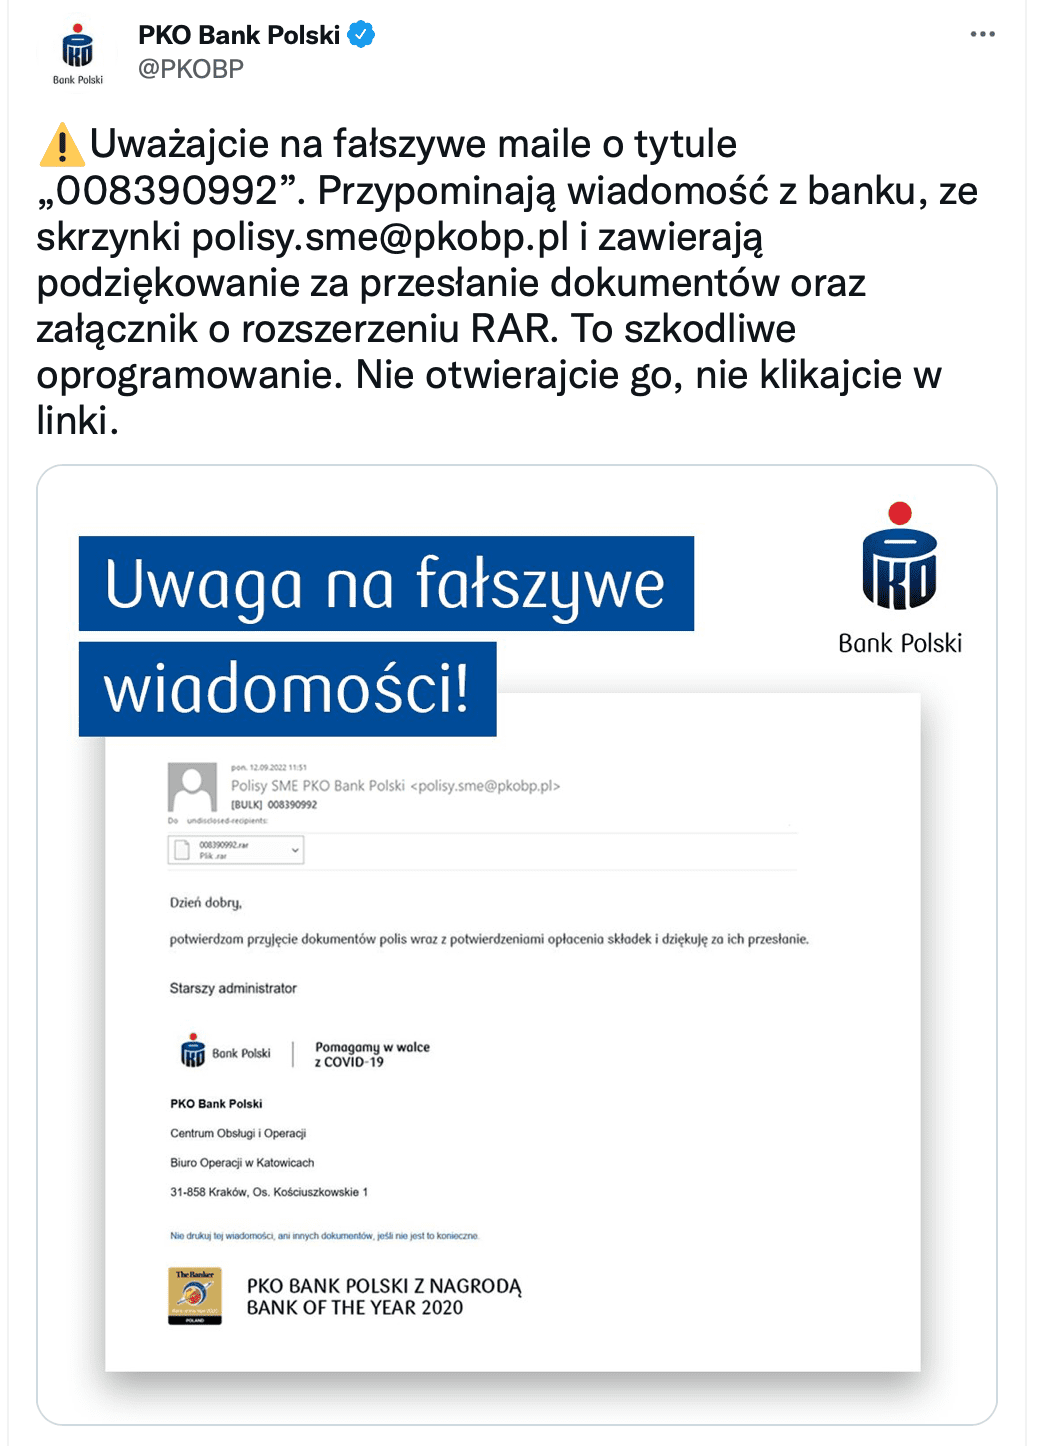 Zdj. PKO Bank Polski/Twitter